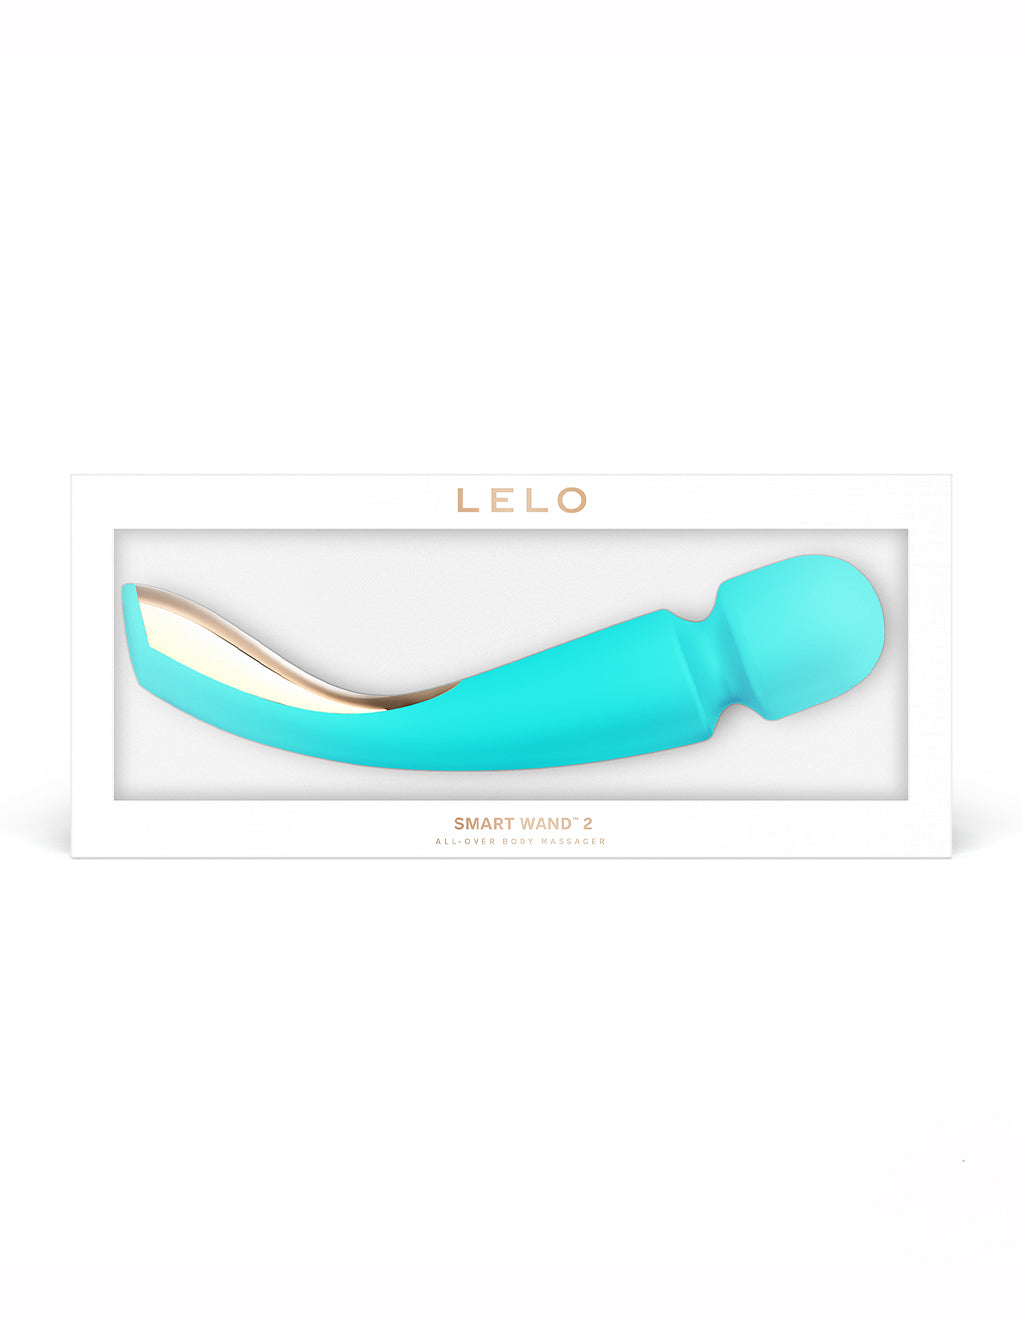 Lelo Smart Wand 2 Large- Aqua- Package 